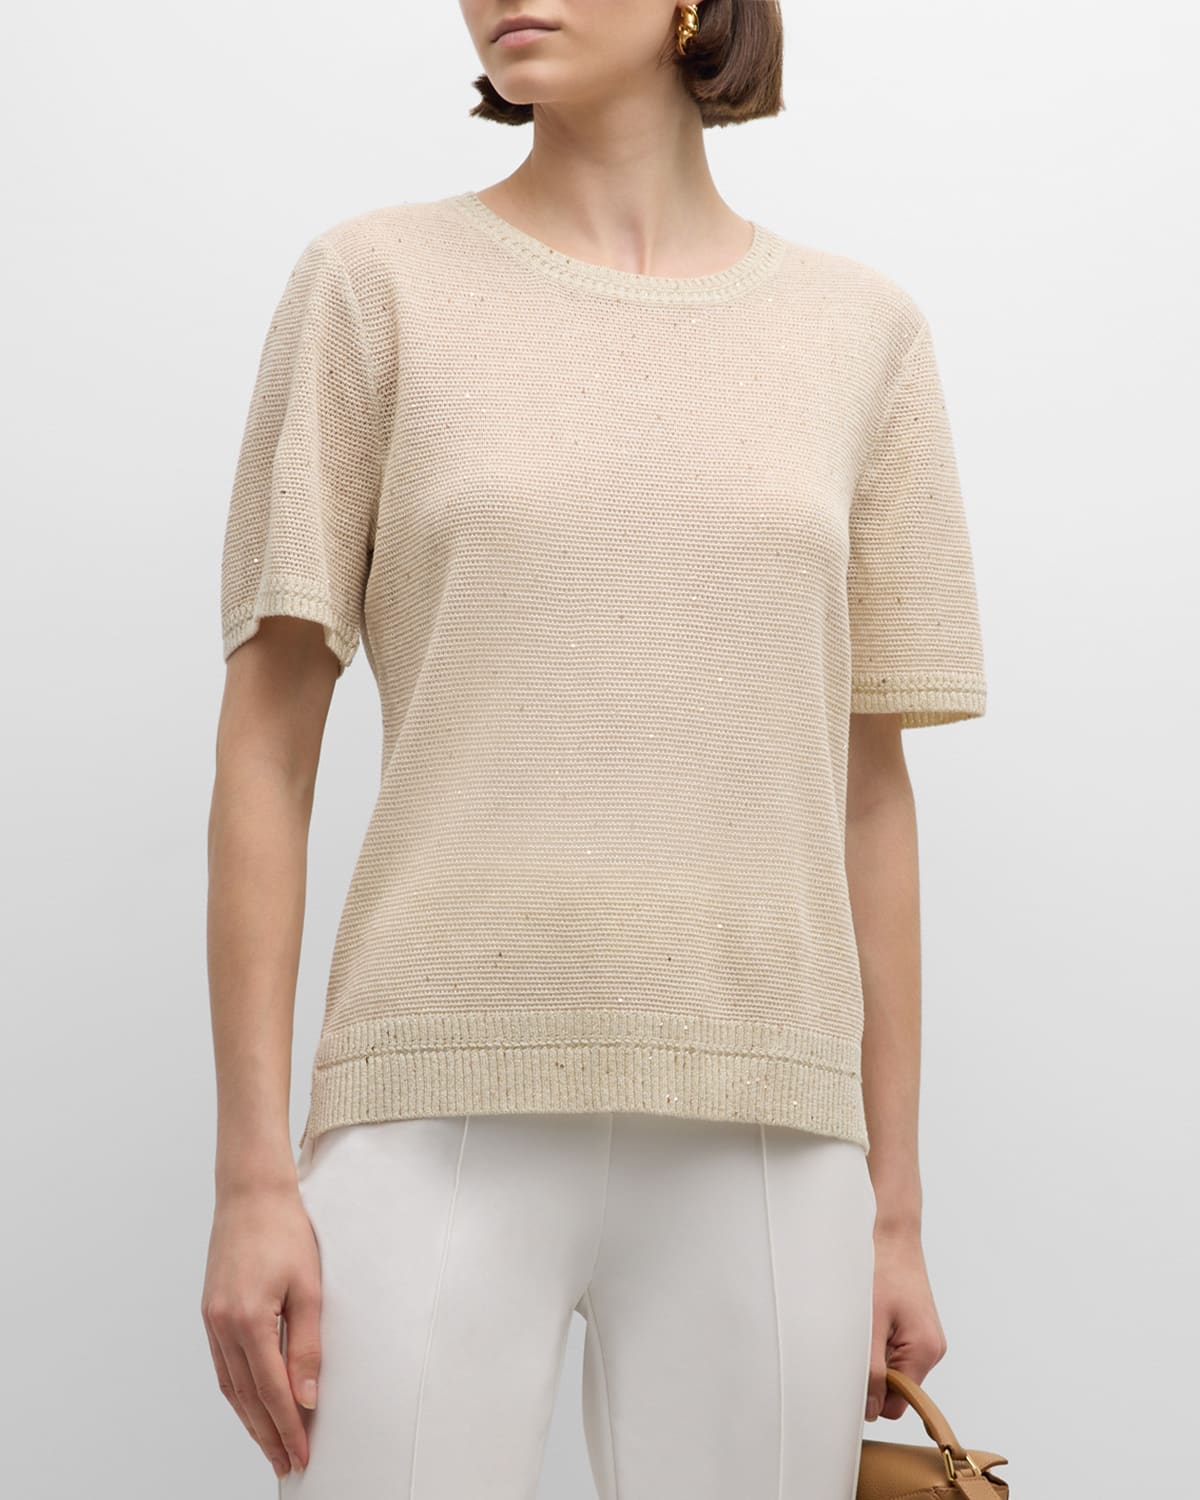 Noa Sequin-Embellished Crewneck Sweater